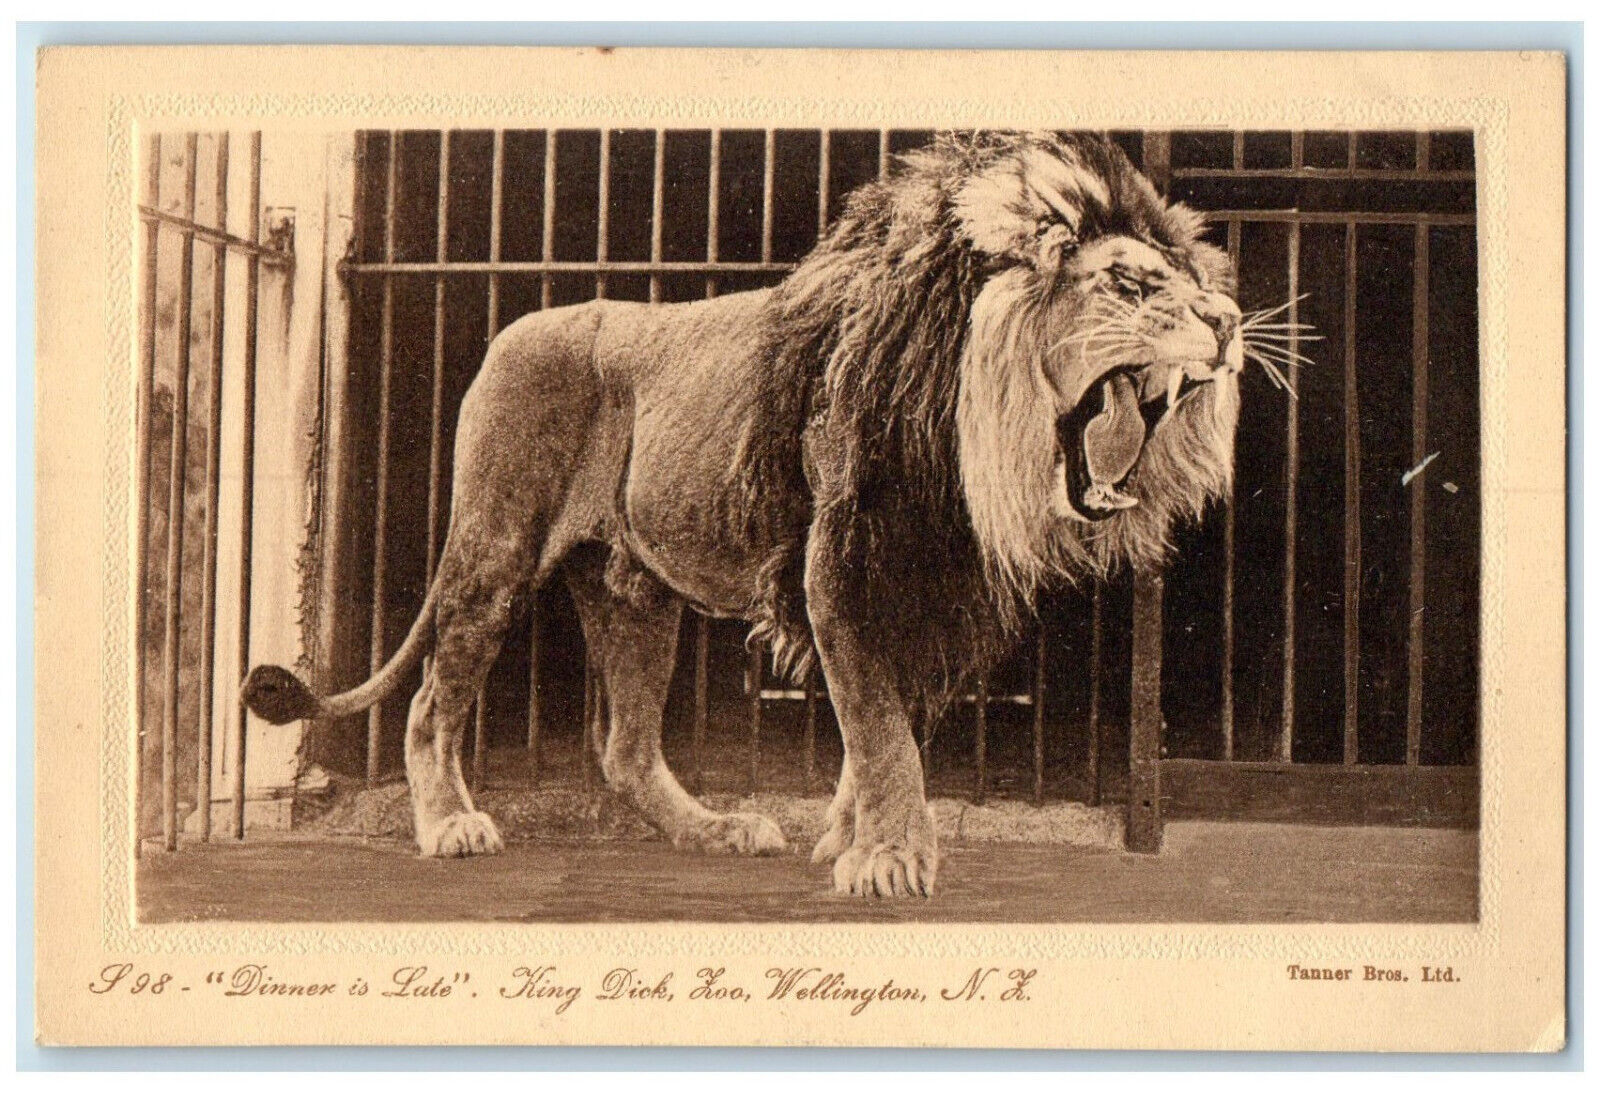 c1940\'s Lion Growl Dinner is Late King Dick Loo Wellington New Zealand Postcard